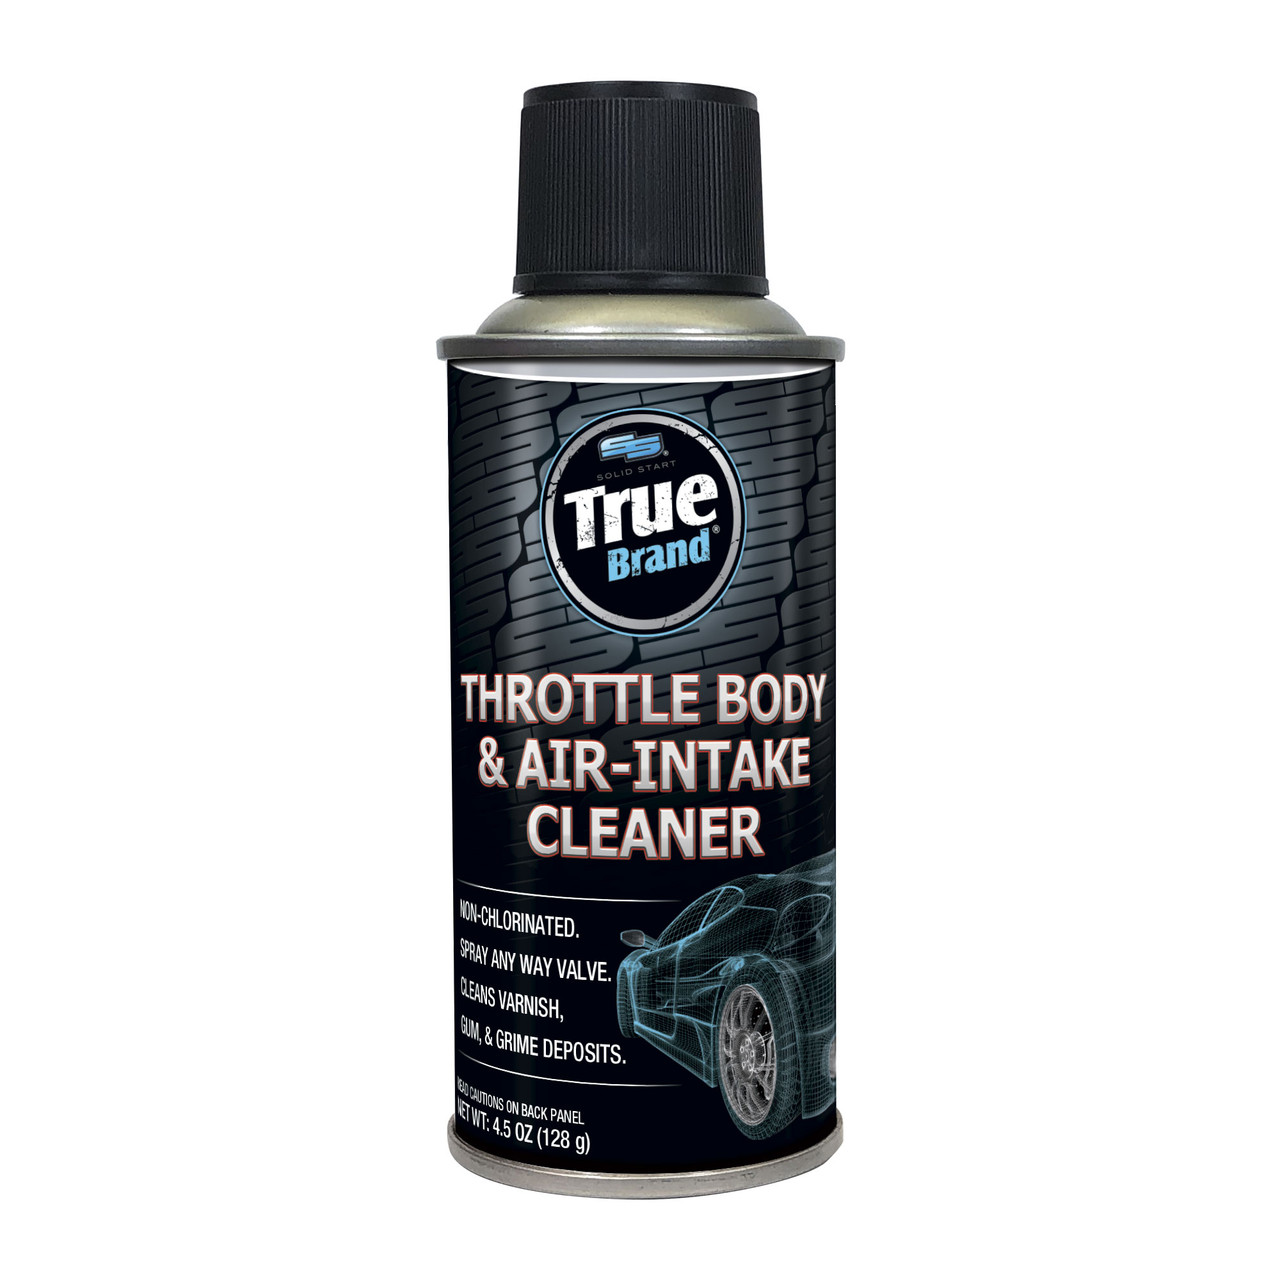 True Brand Throttle Body & Air Intake Cleaner